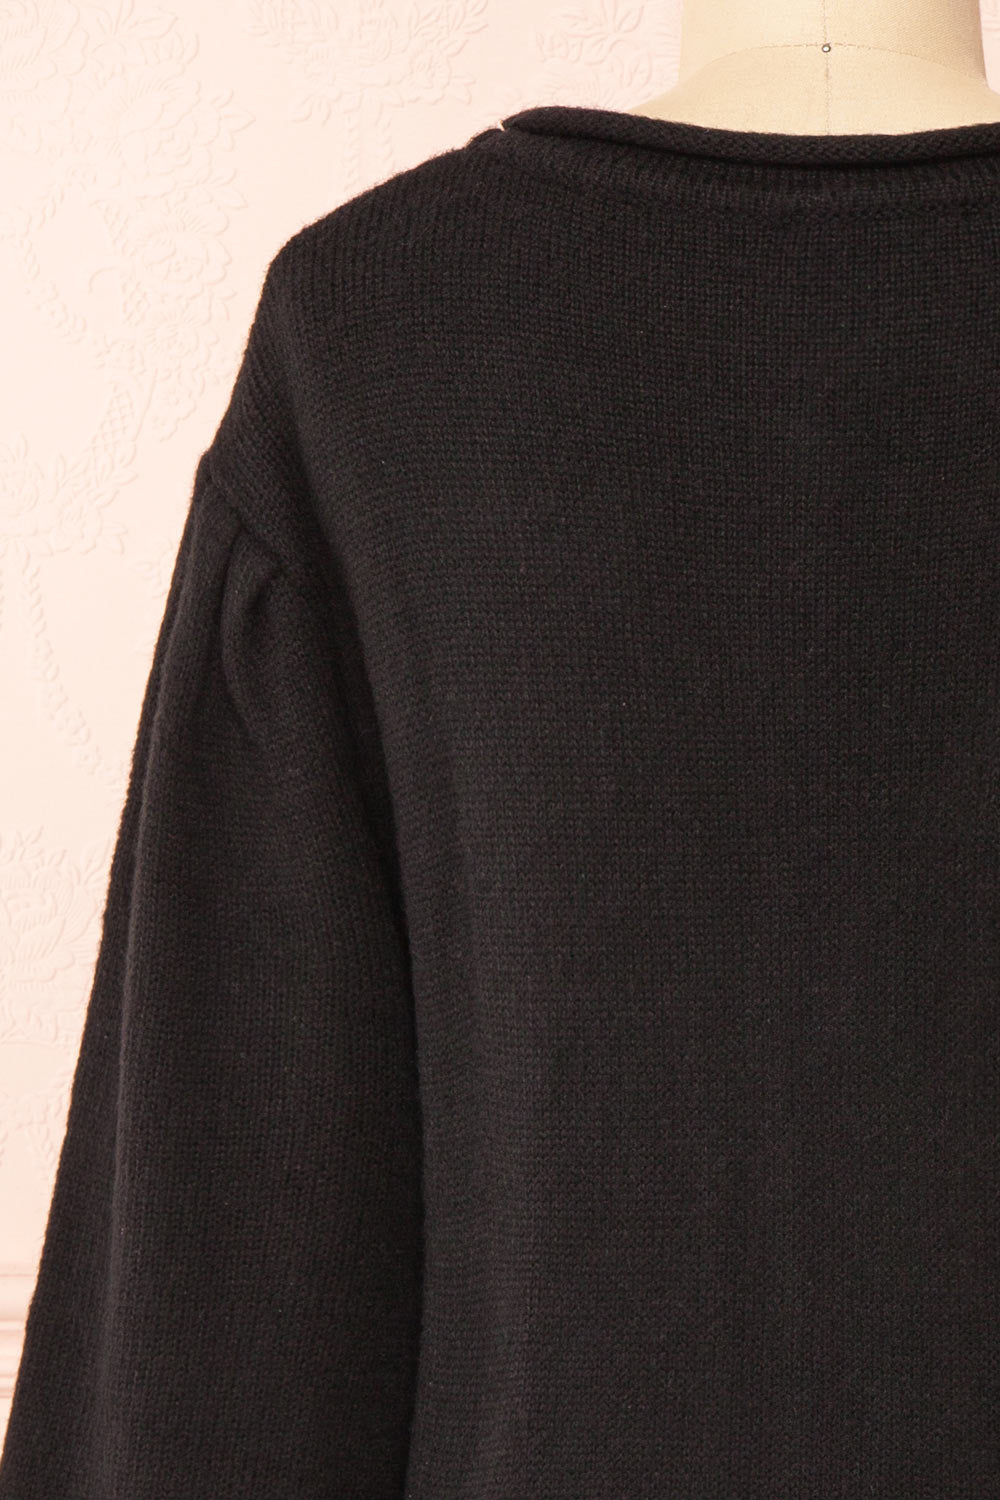 Fleriel Rose Print Sweater | Boutique 1861 back close-up